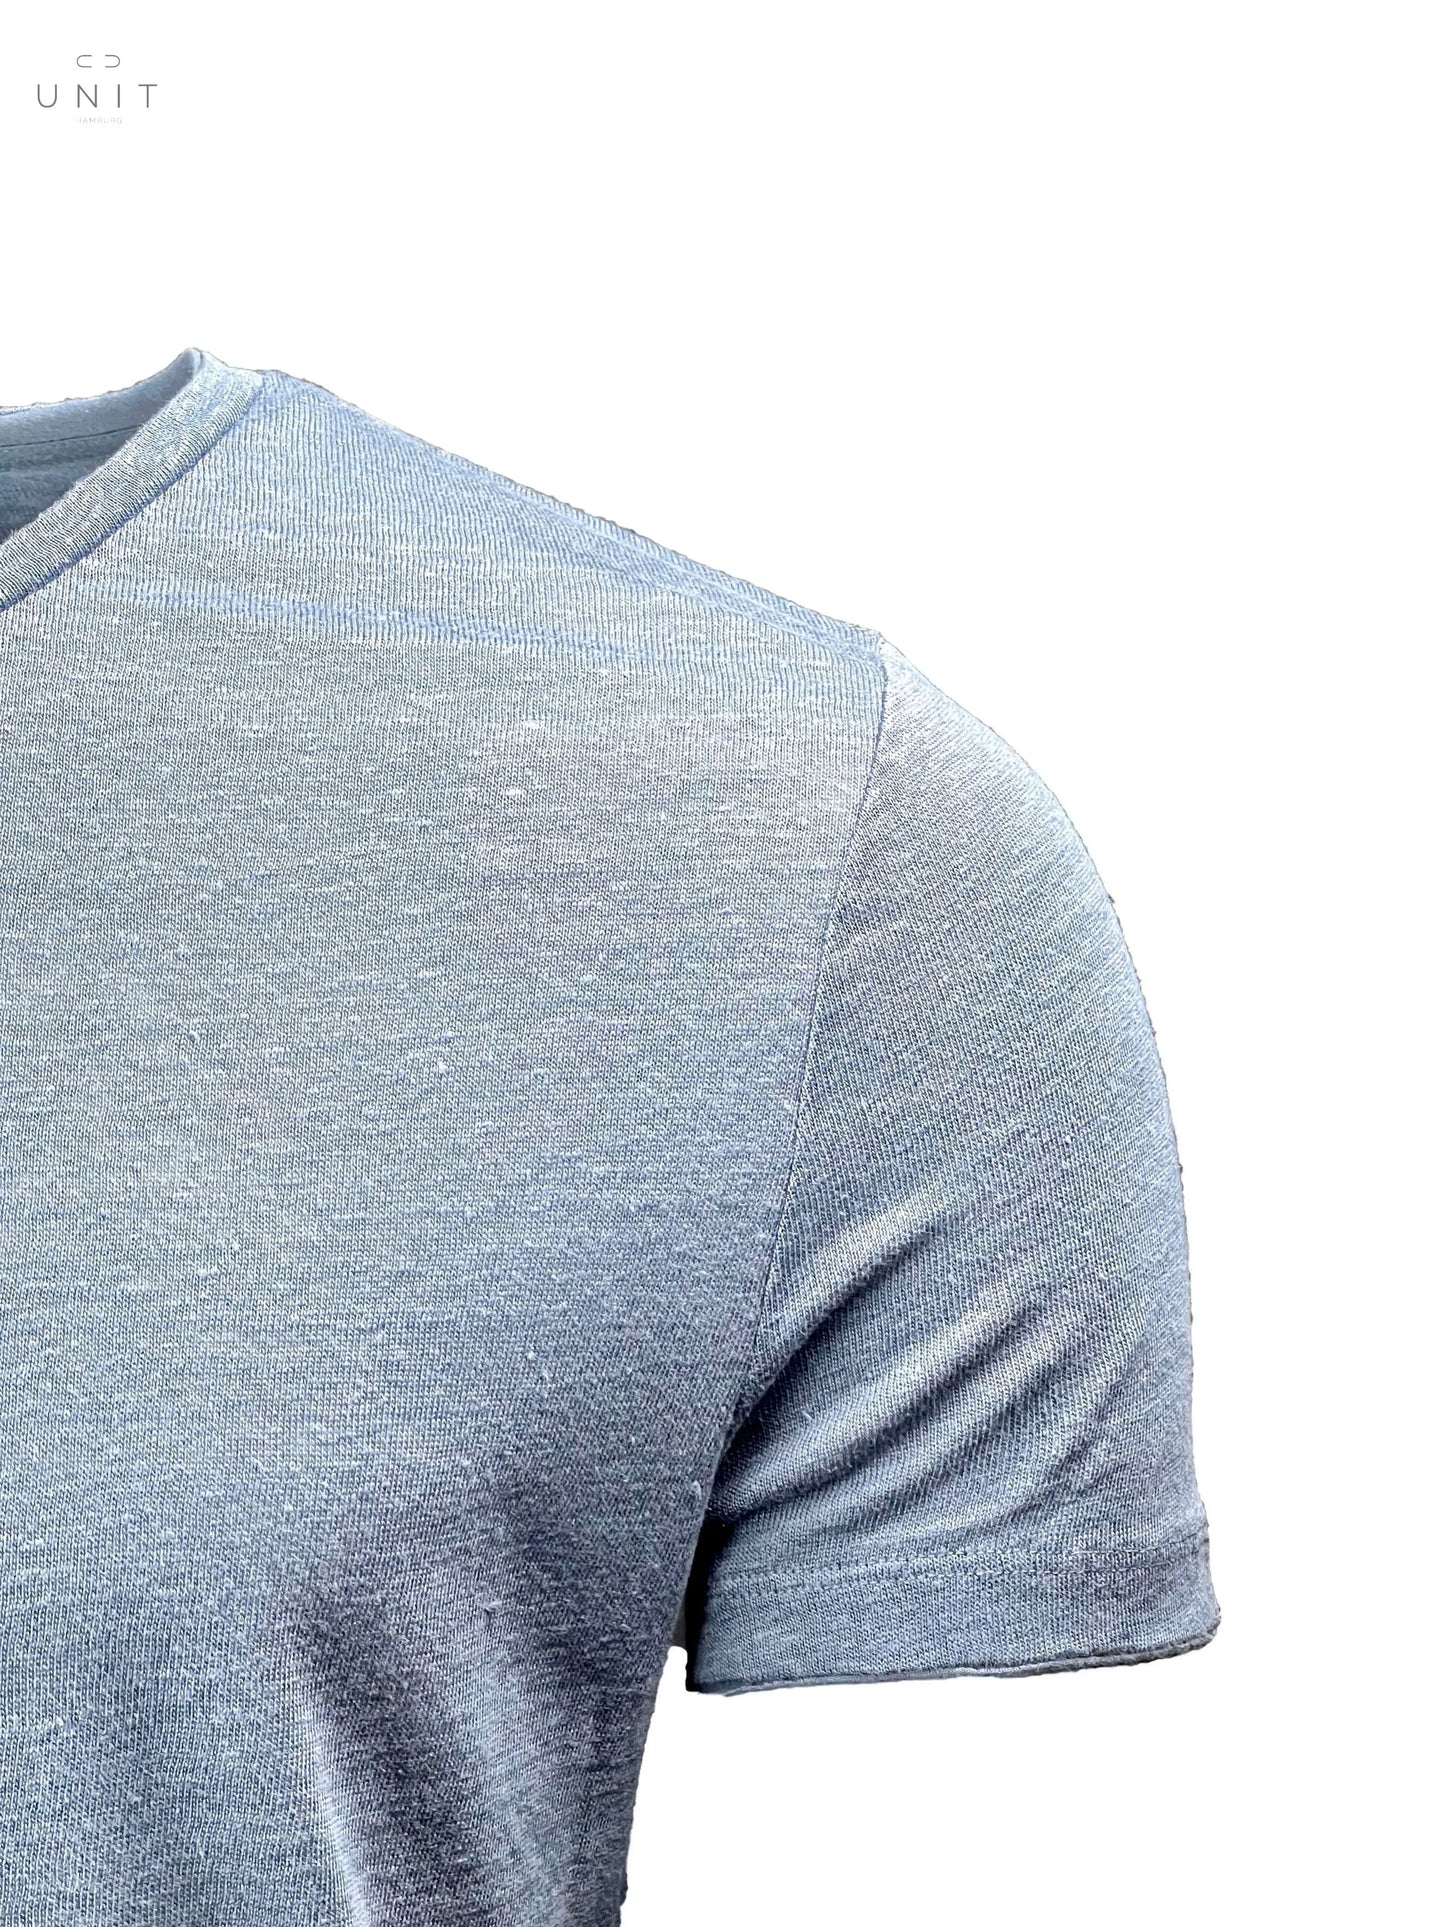 Schulterpartie von Kiefermann 432-21085 Flynn  Leinen T-Shirt V-Neck slate bleu